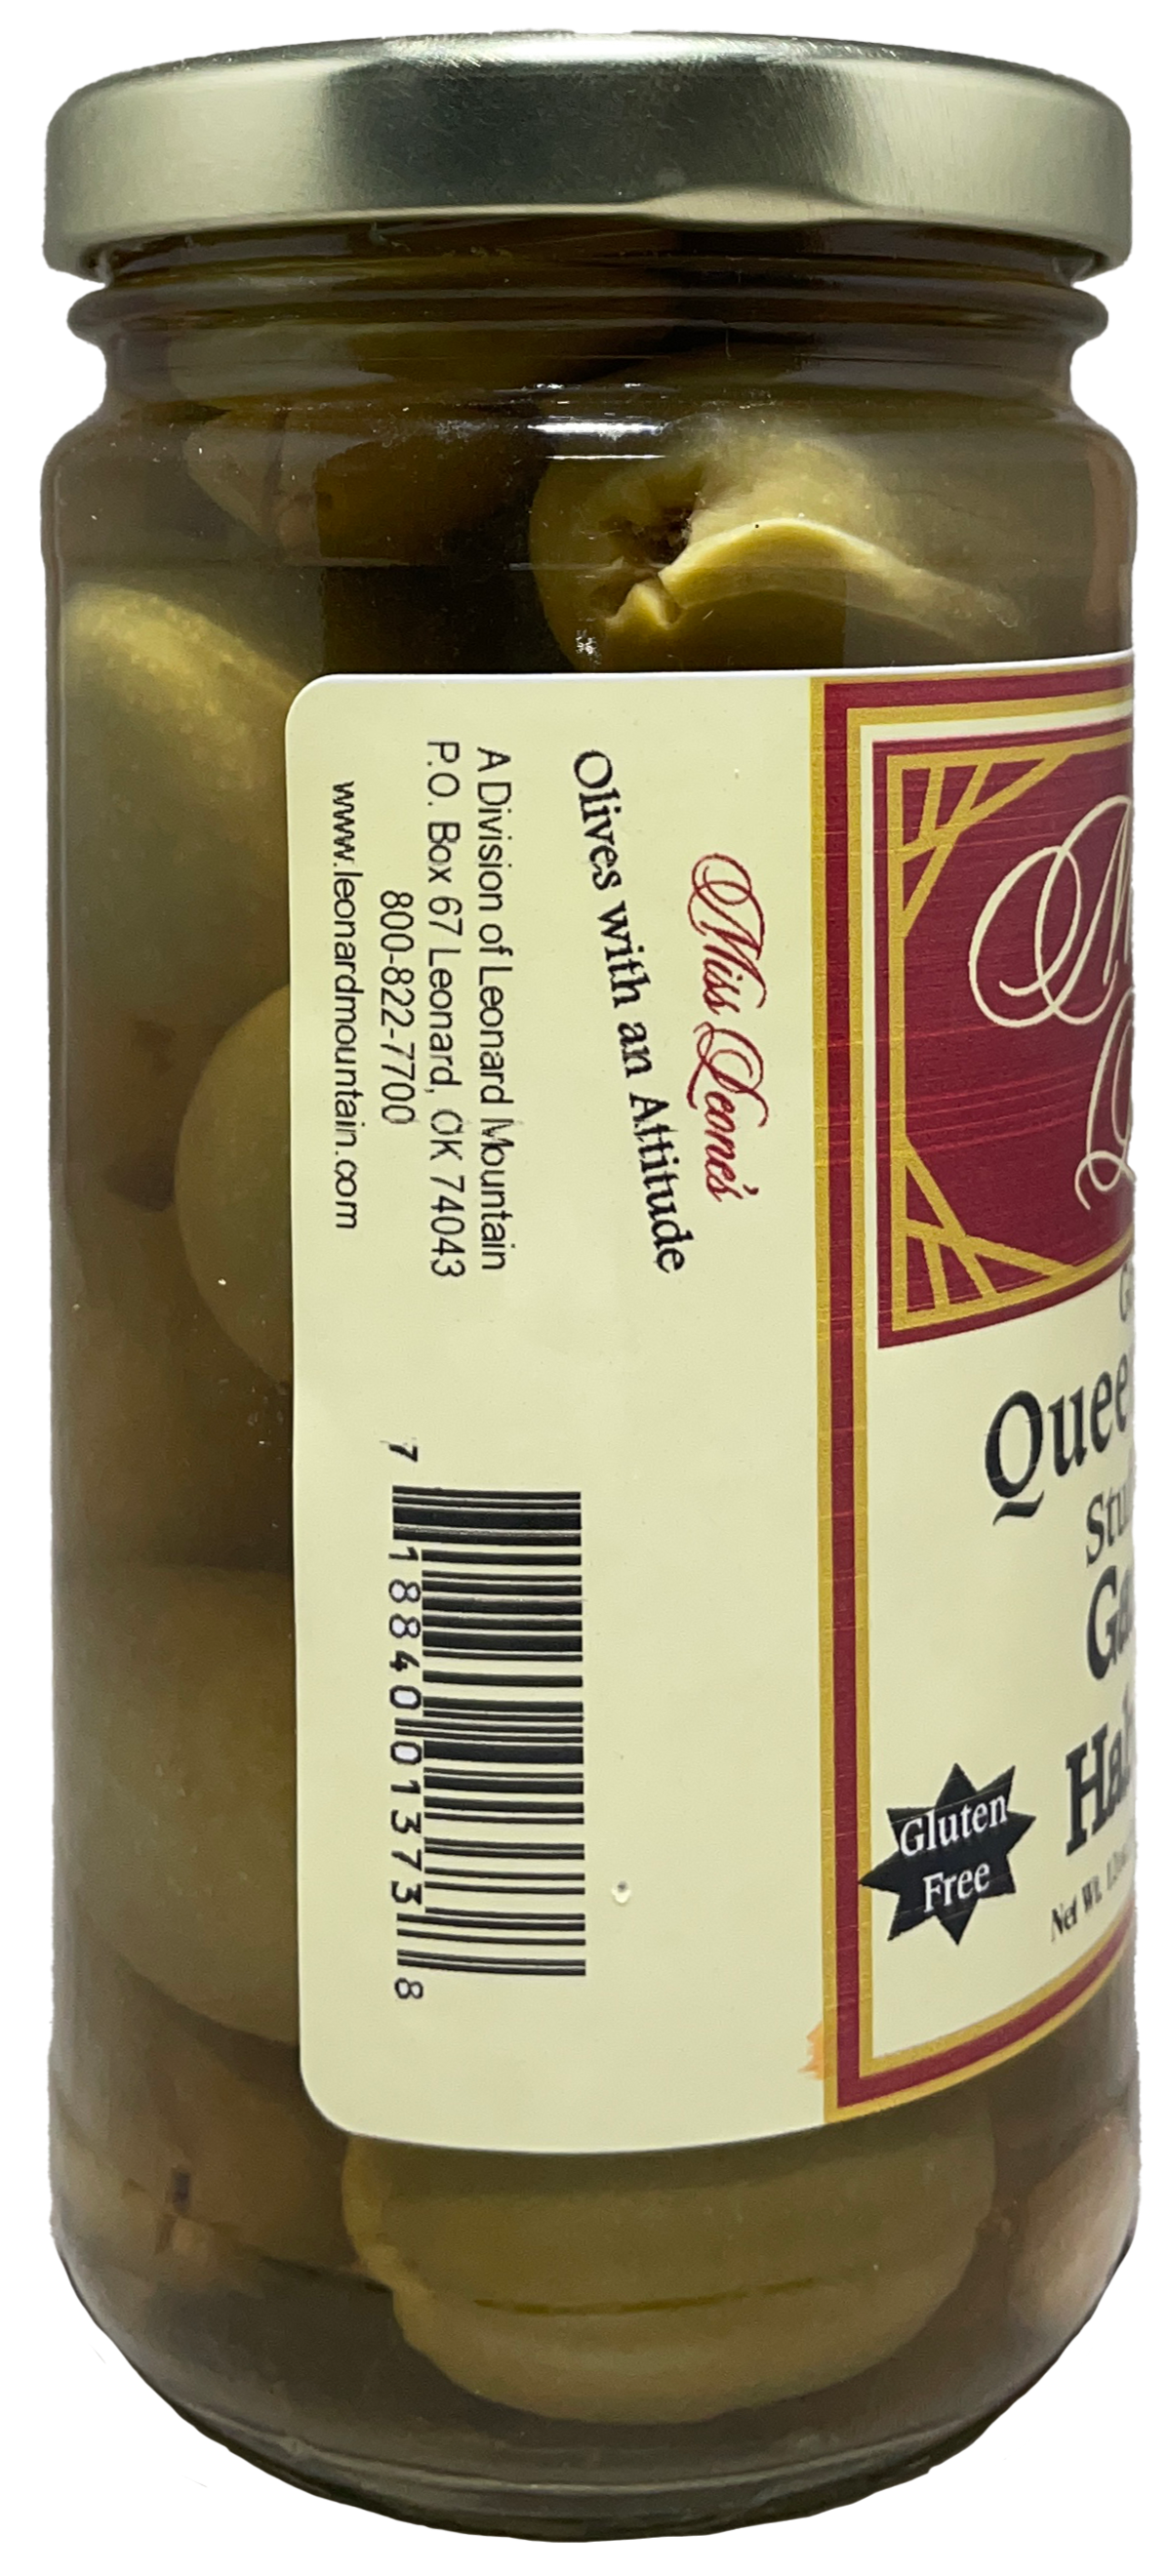 Garlic & Habanero Stuffed Queen Olives *NEW LOWER PRICE*